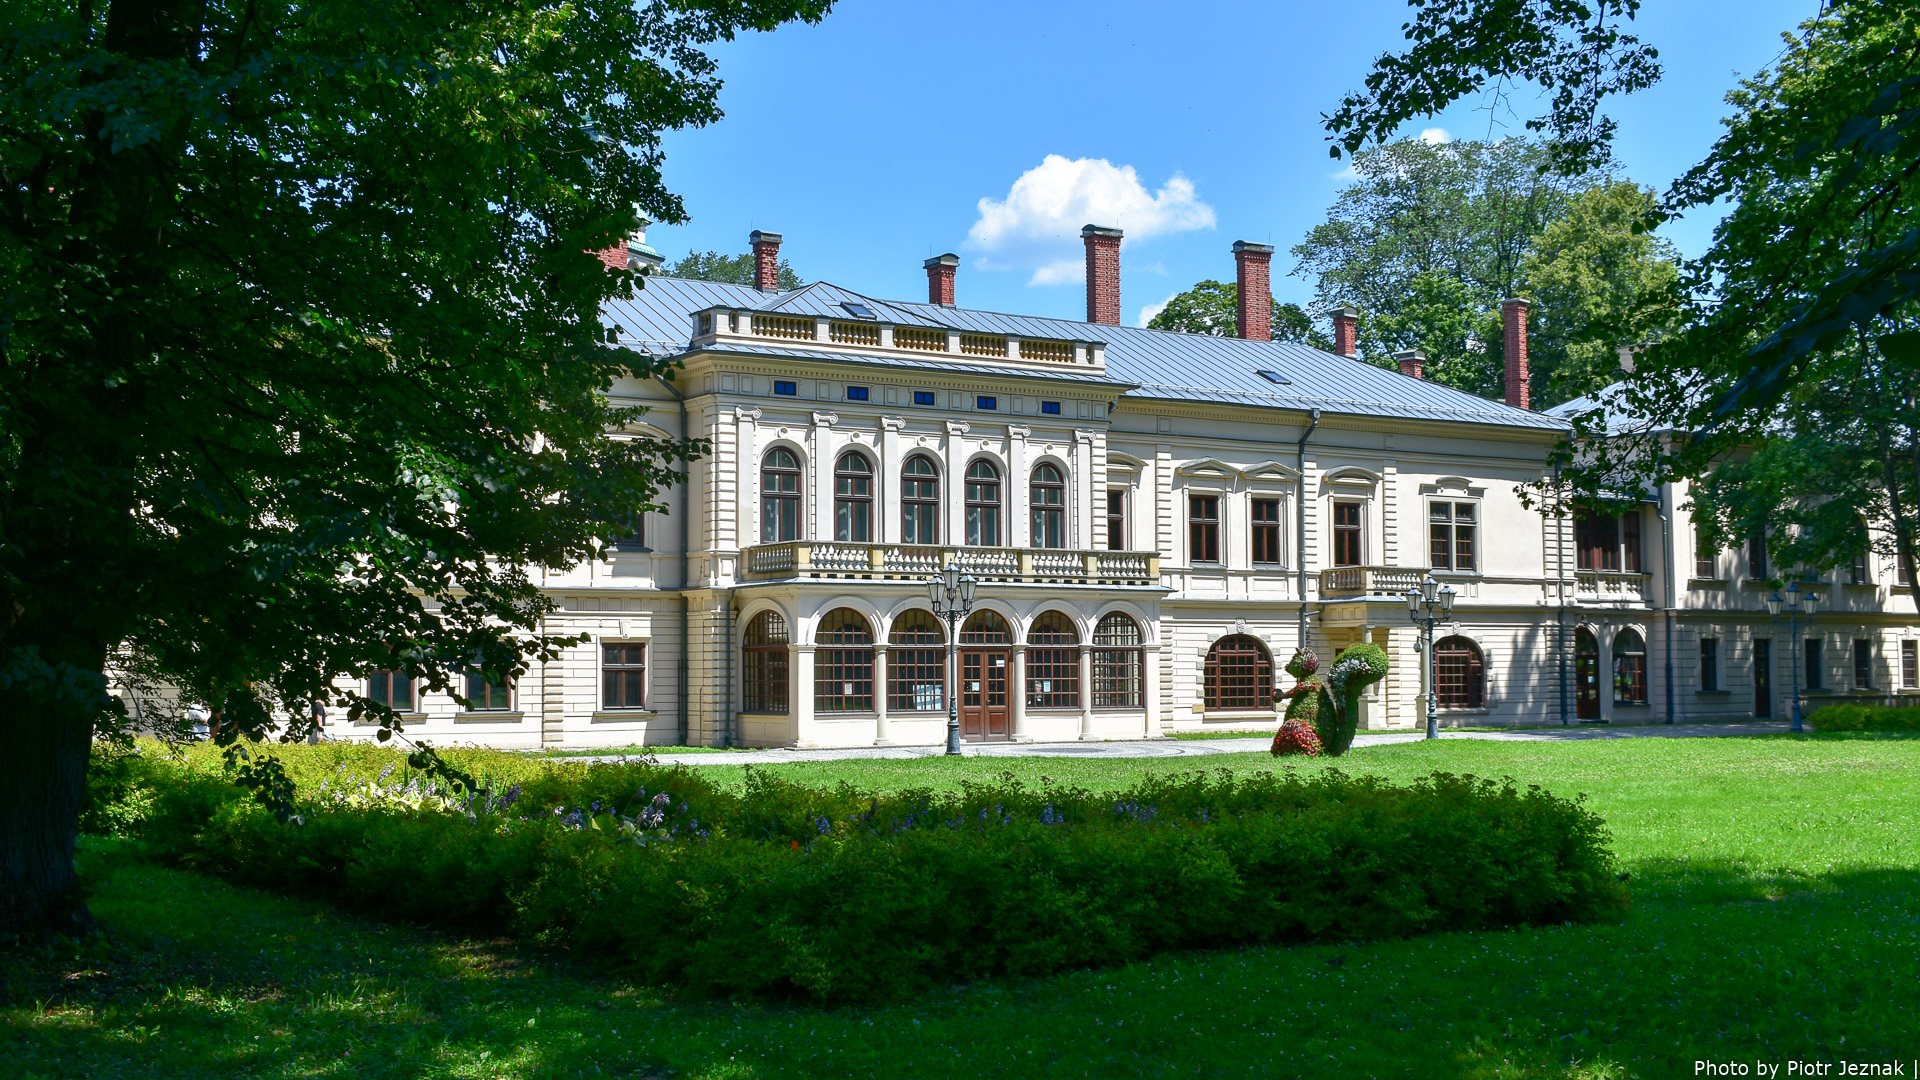 New Castle in Zywiec